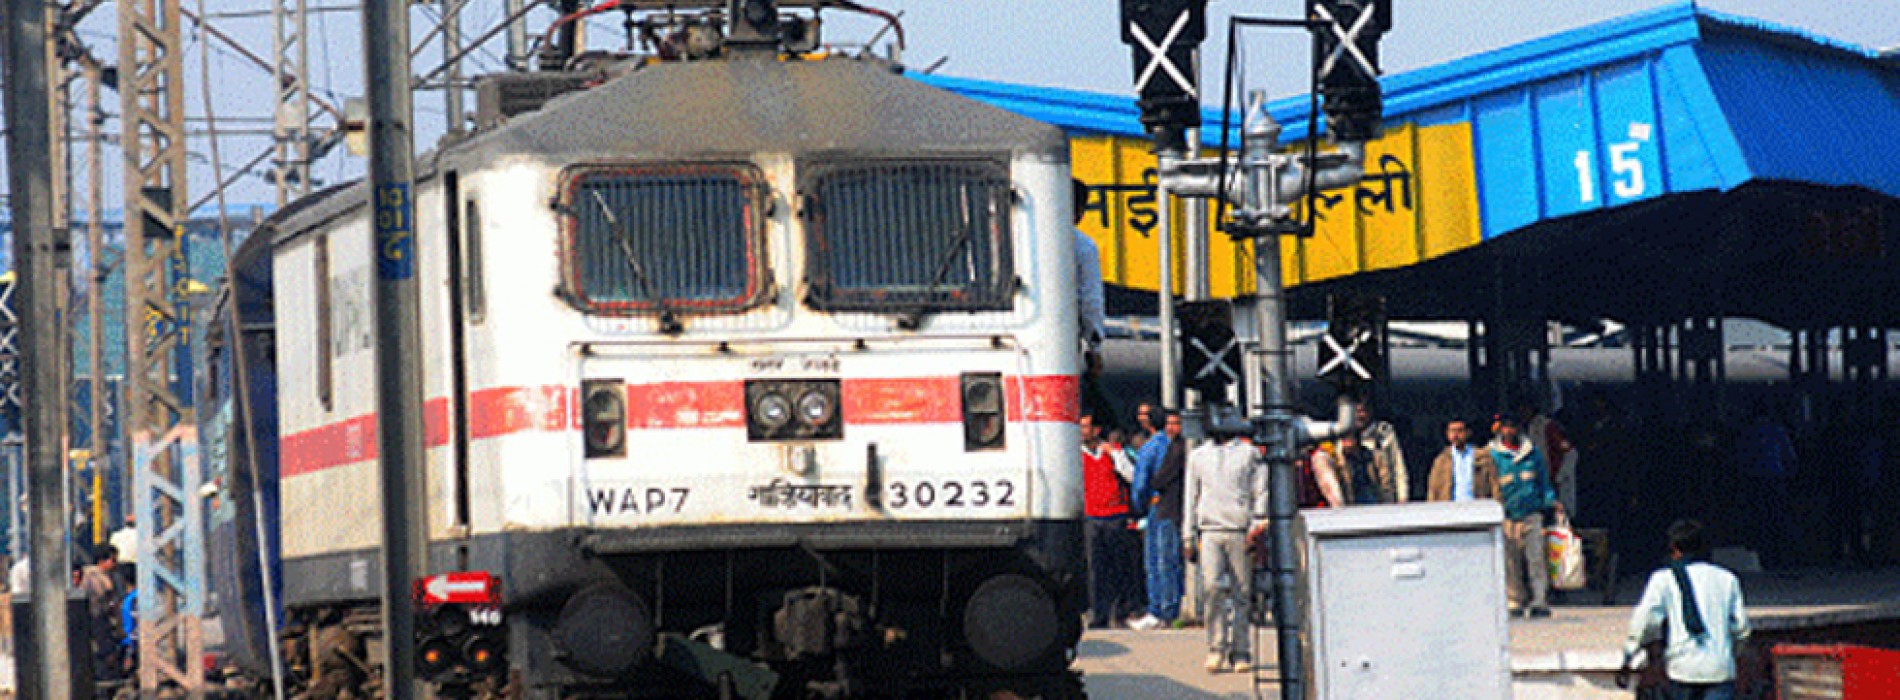 Railways announce 10 per cent rebate in vacant train berths